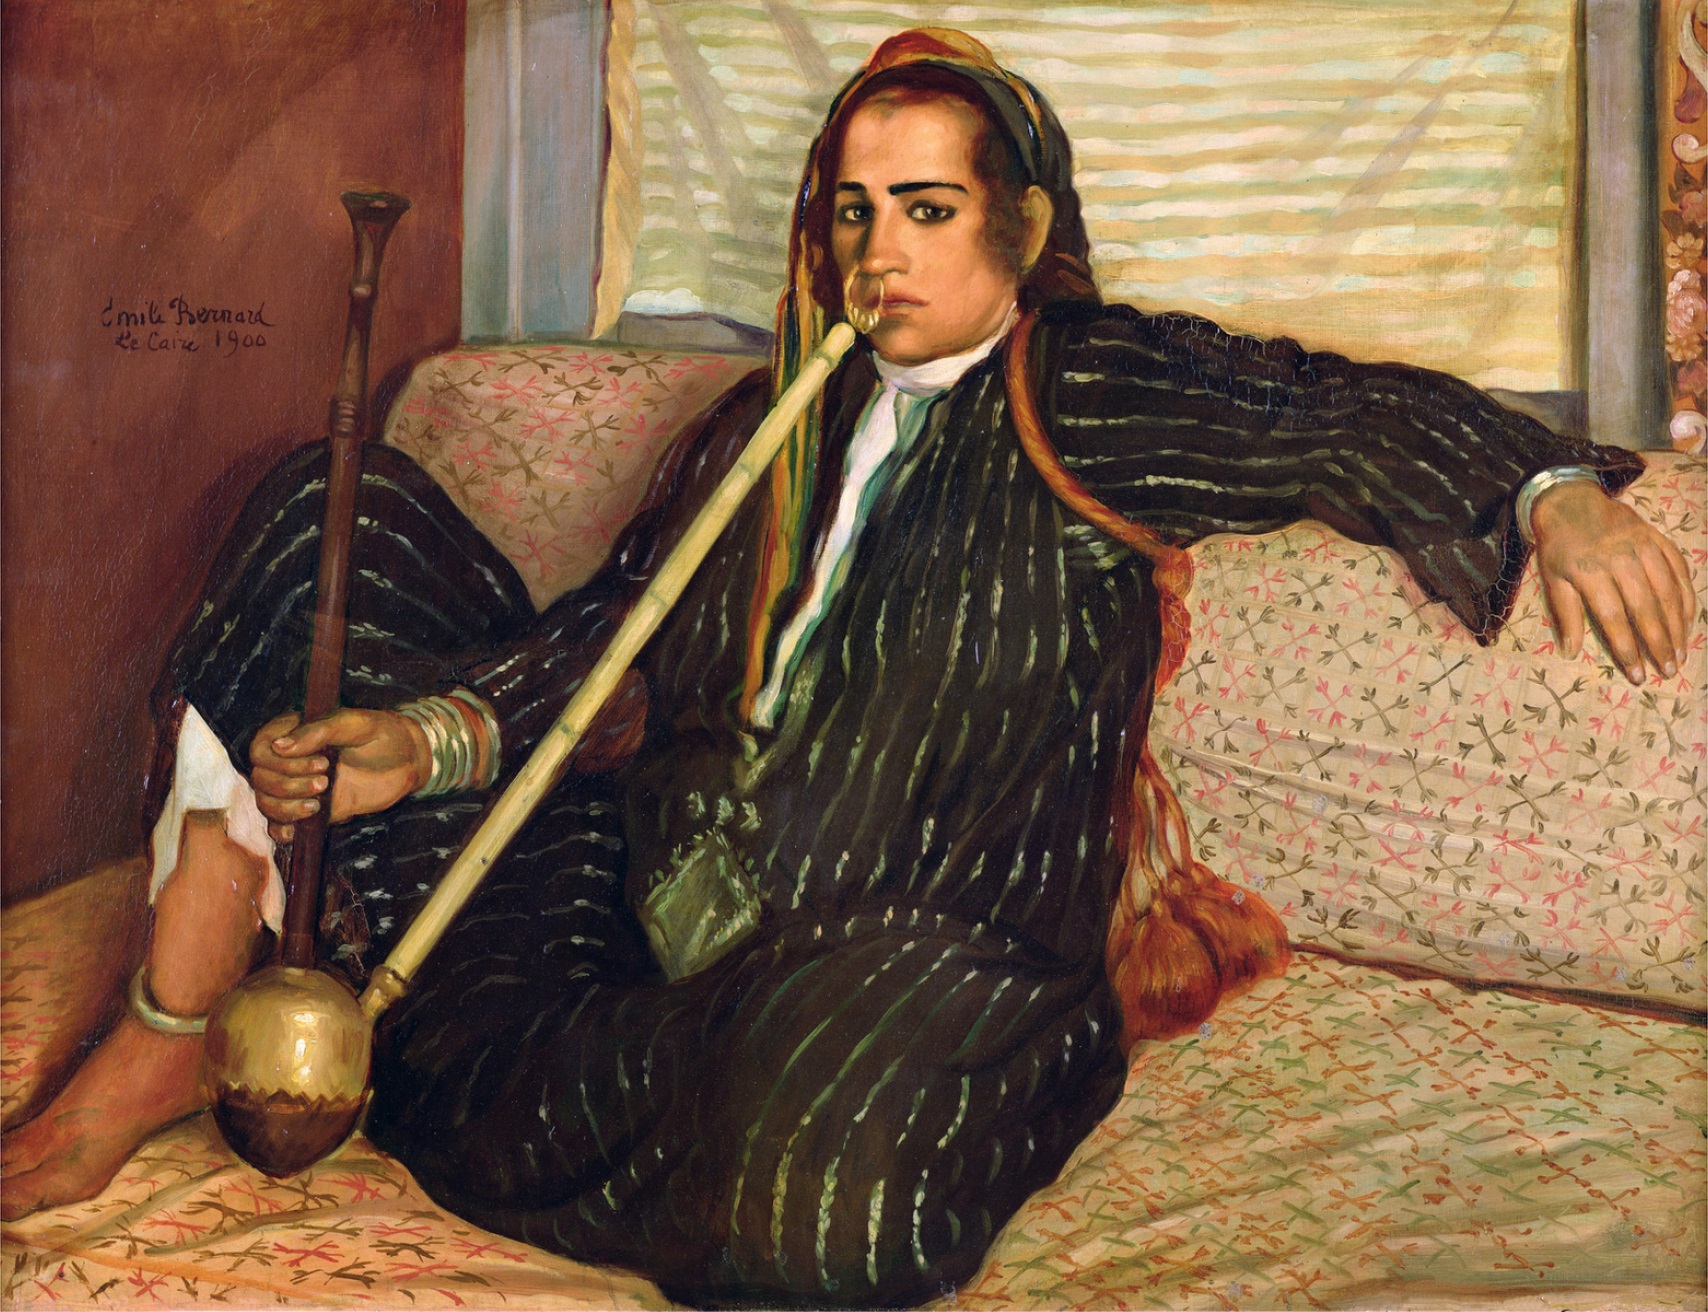 Émile Bernard: Hasist szívó nő (La fumeuse de Haschisch, 1900)